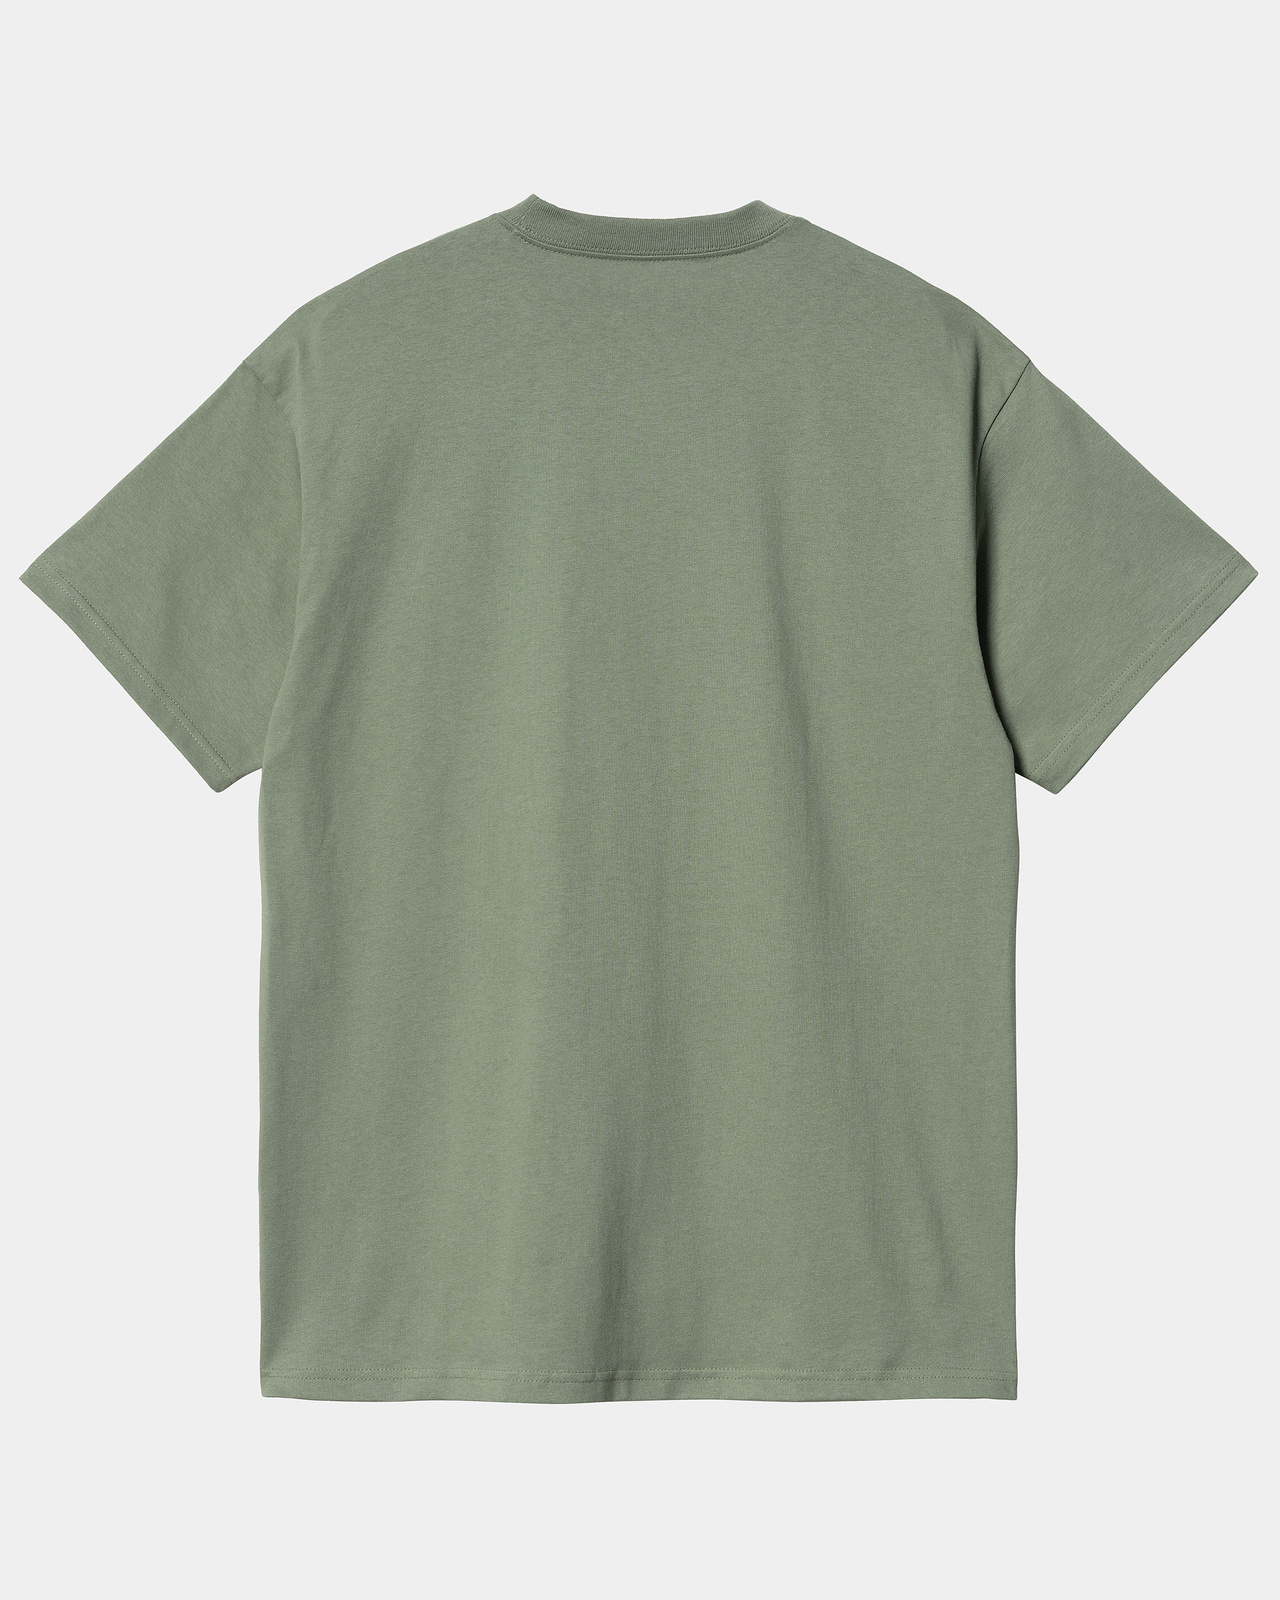 T-shirt Field Pocket - Park - S